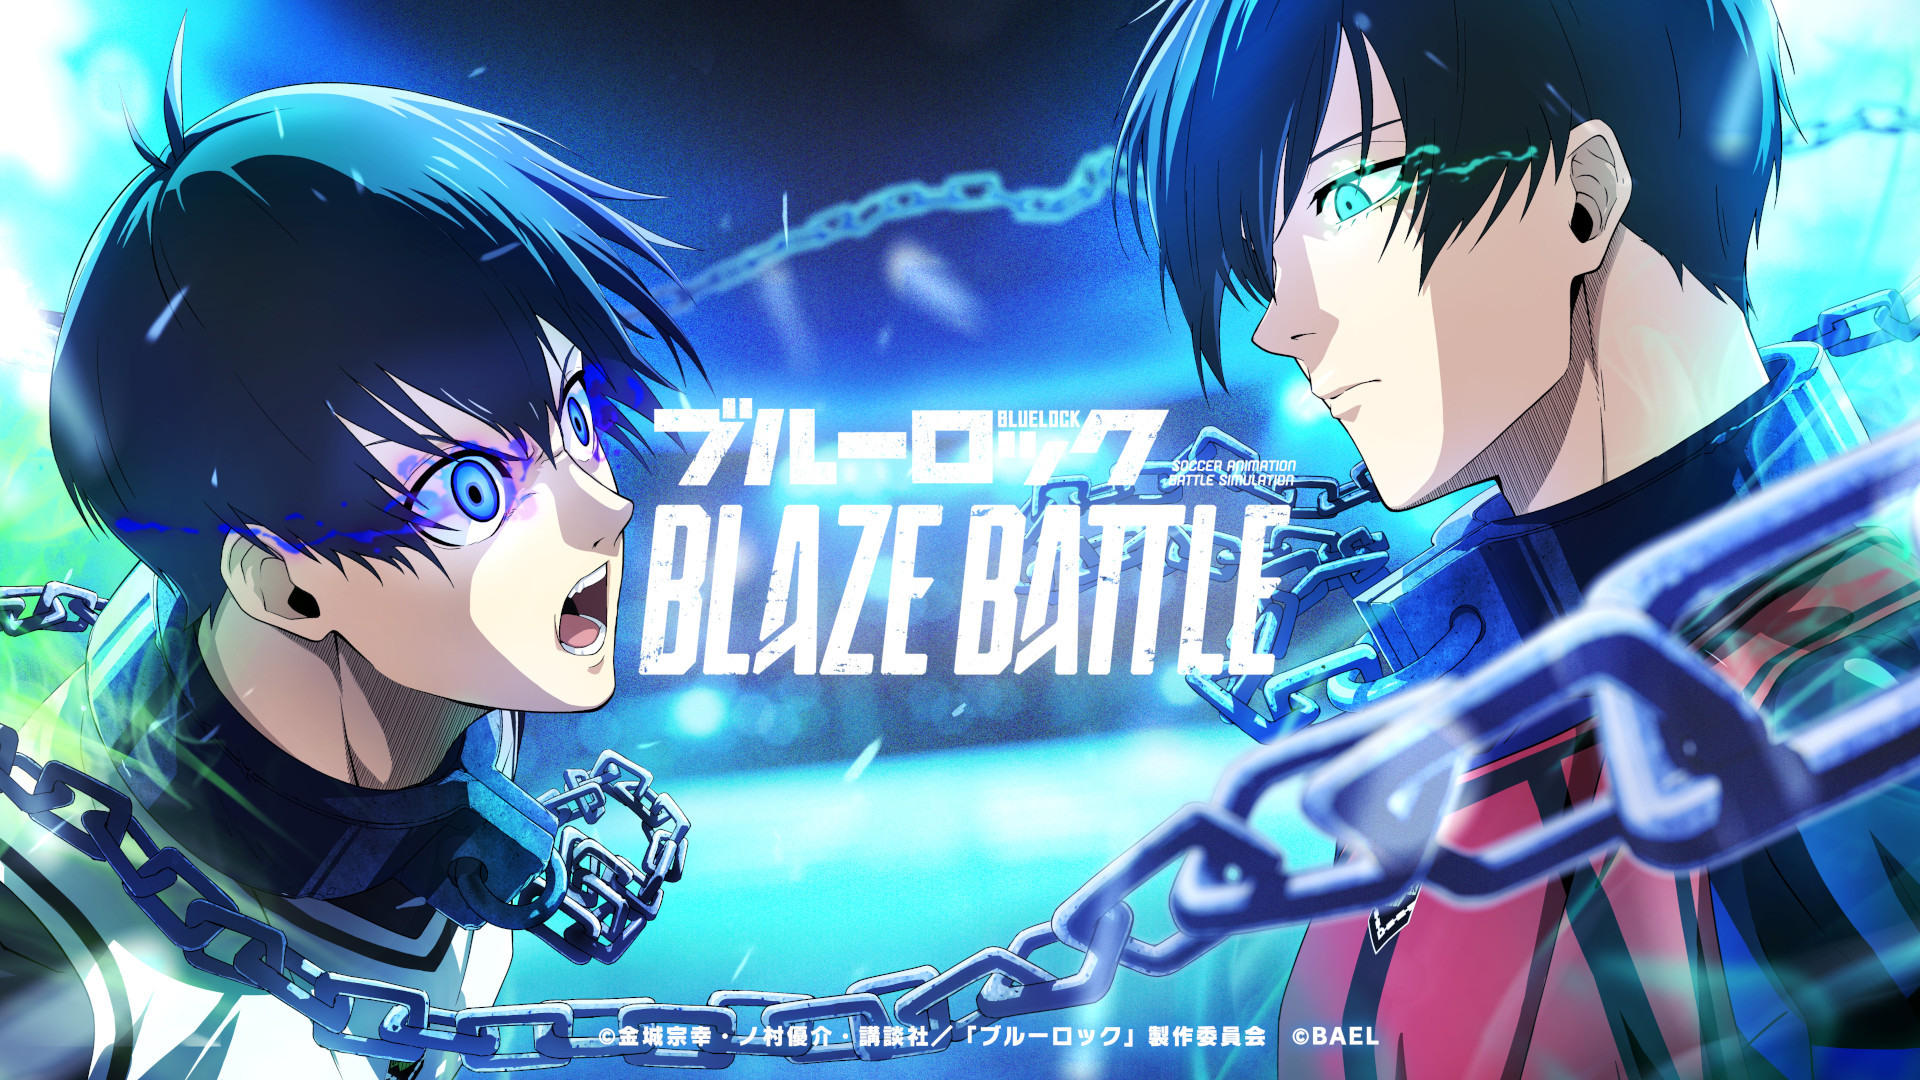 3D 足球遊戲《藍色監獄 BLAZE BATTLE》預計 2023 年在日本推出 釋出遊戲前導影片